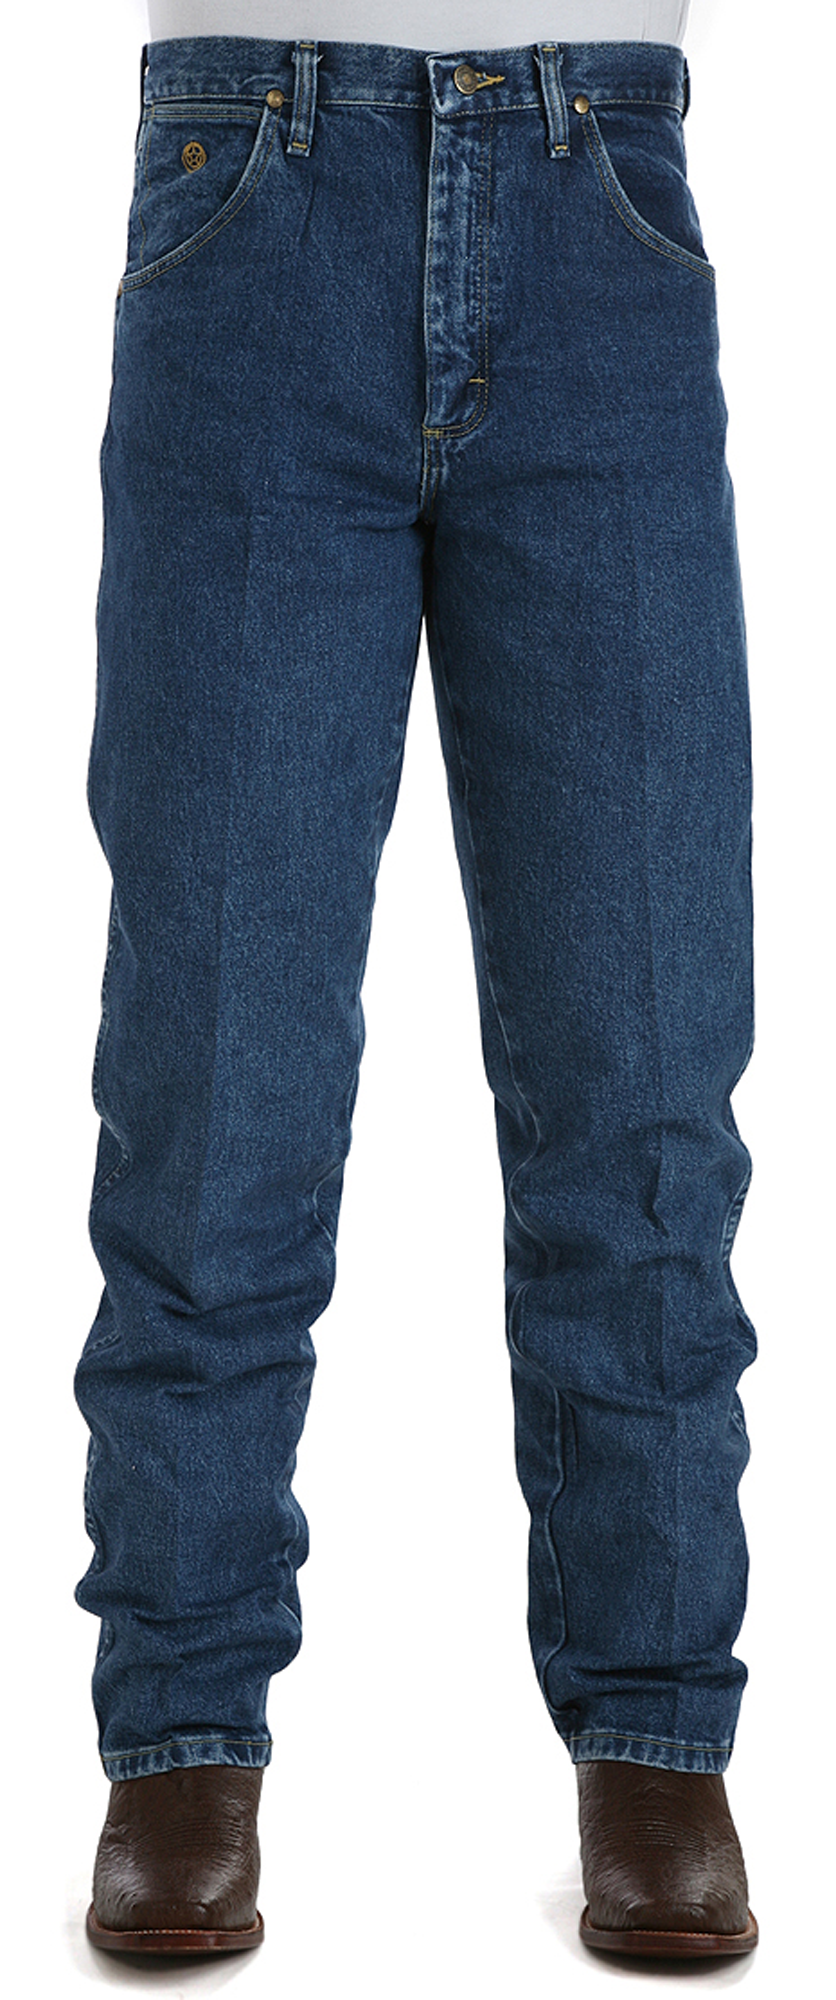 Wrangler George Strait Cowboy-Cut Relaxed-Fit Jeans for Men | Bass Pro Shops